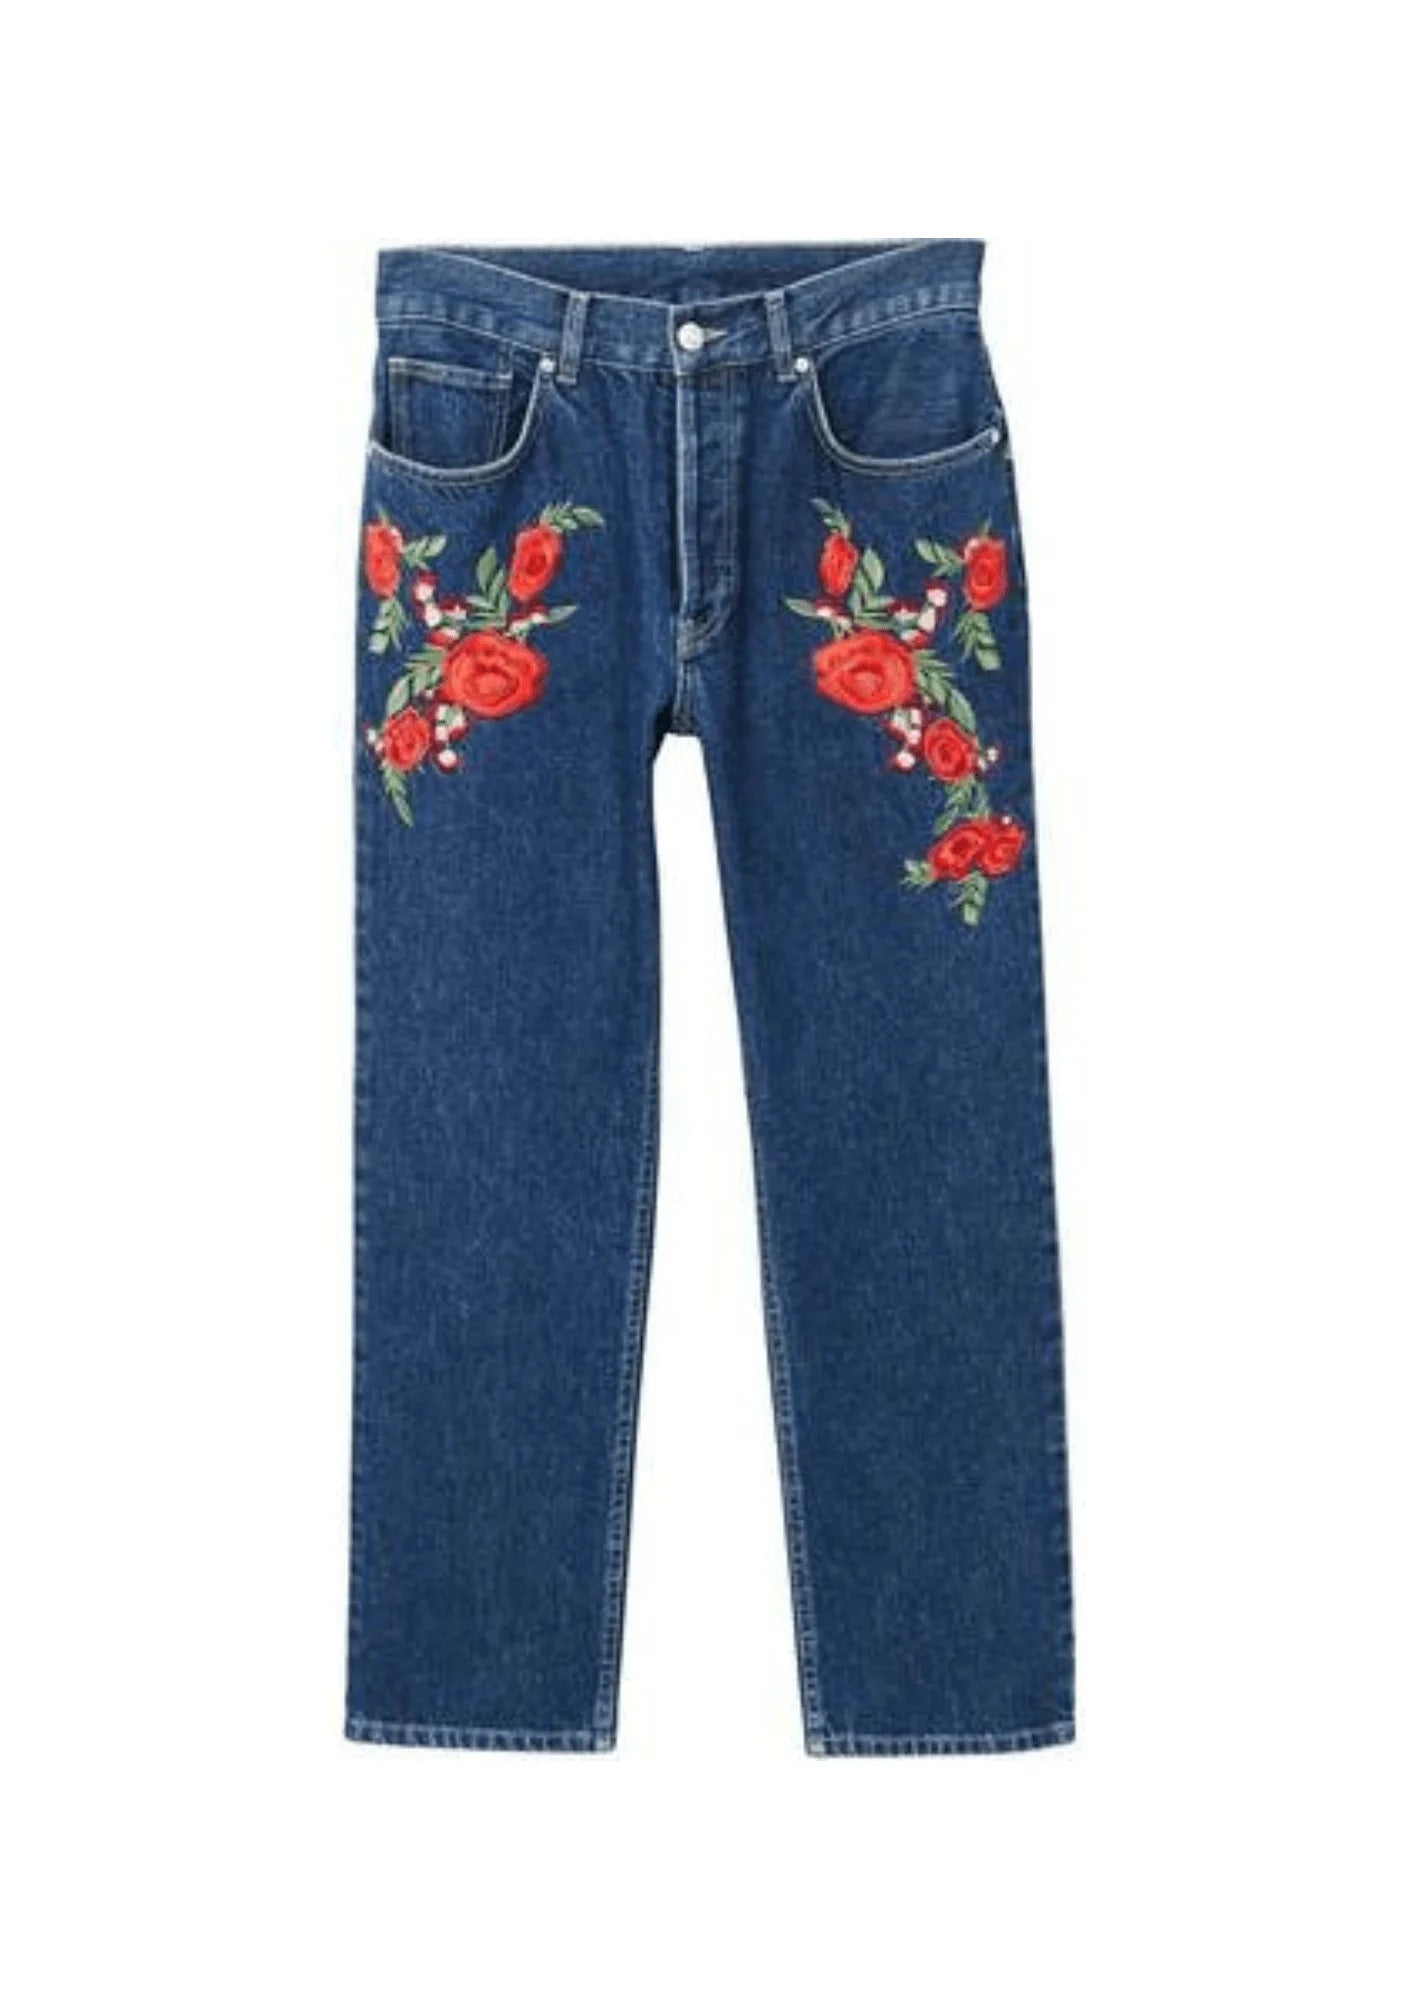 Pantalon en jean brodé floral